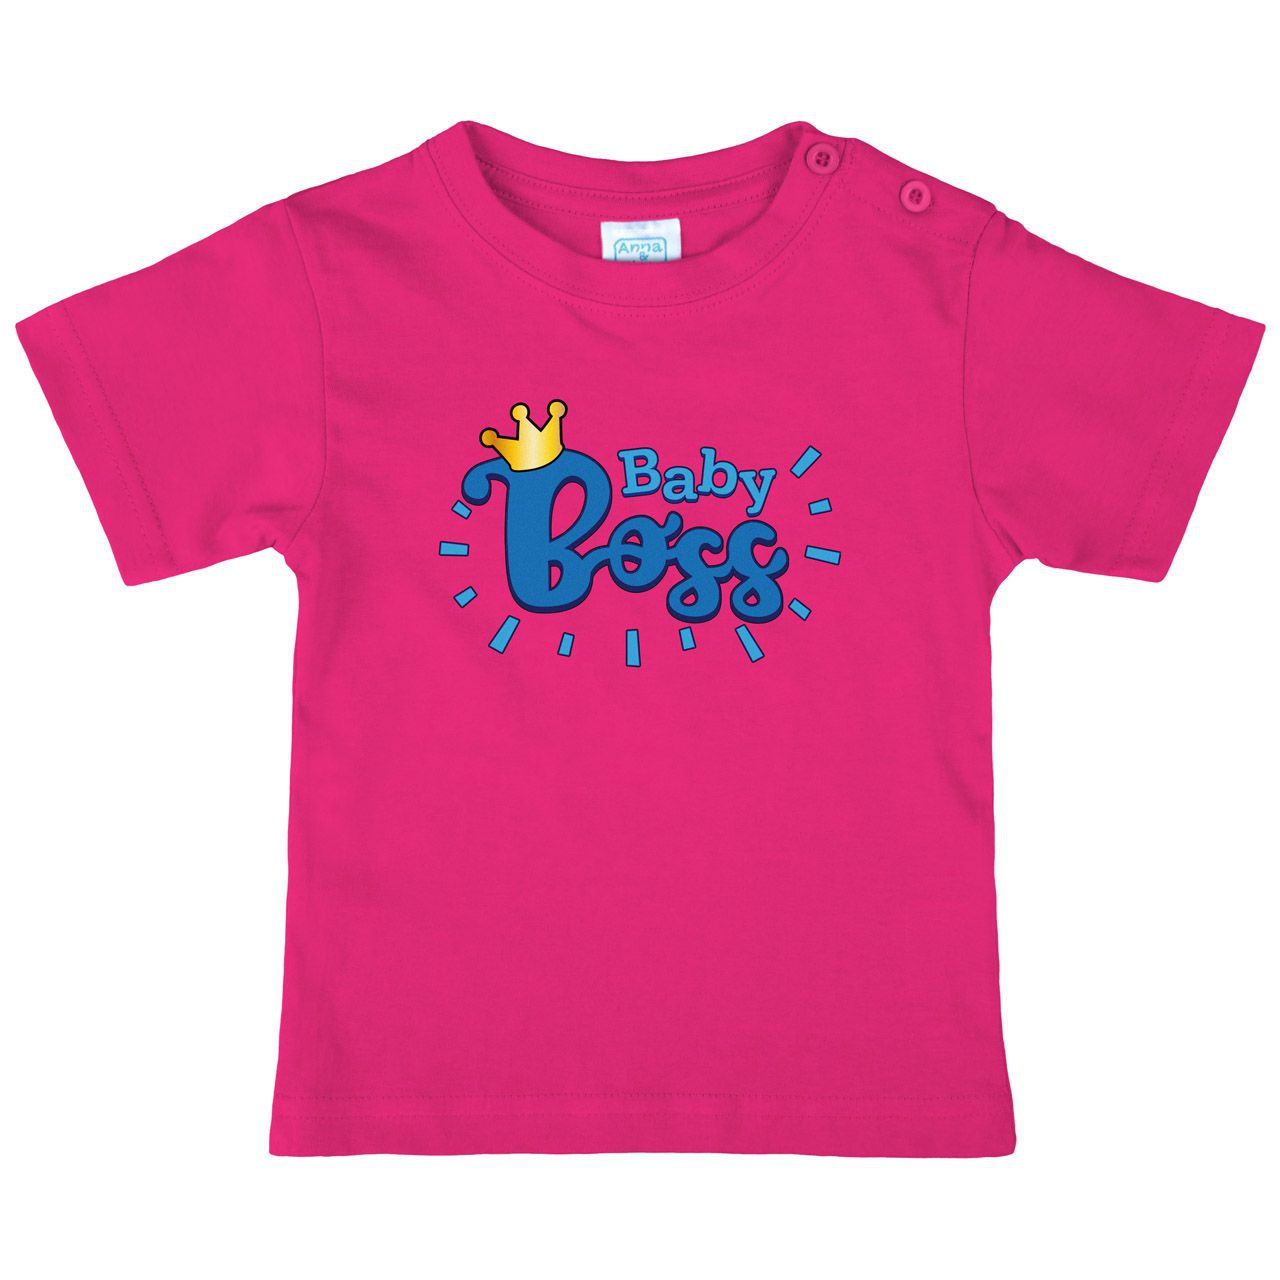 Baby Boss Blau Kinder T-Shirt pink 56 / 62